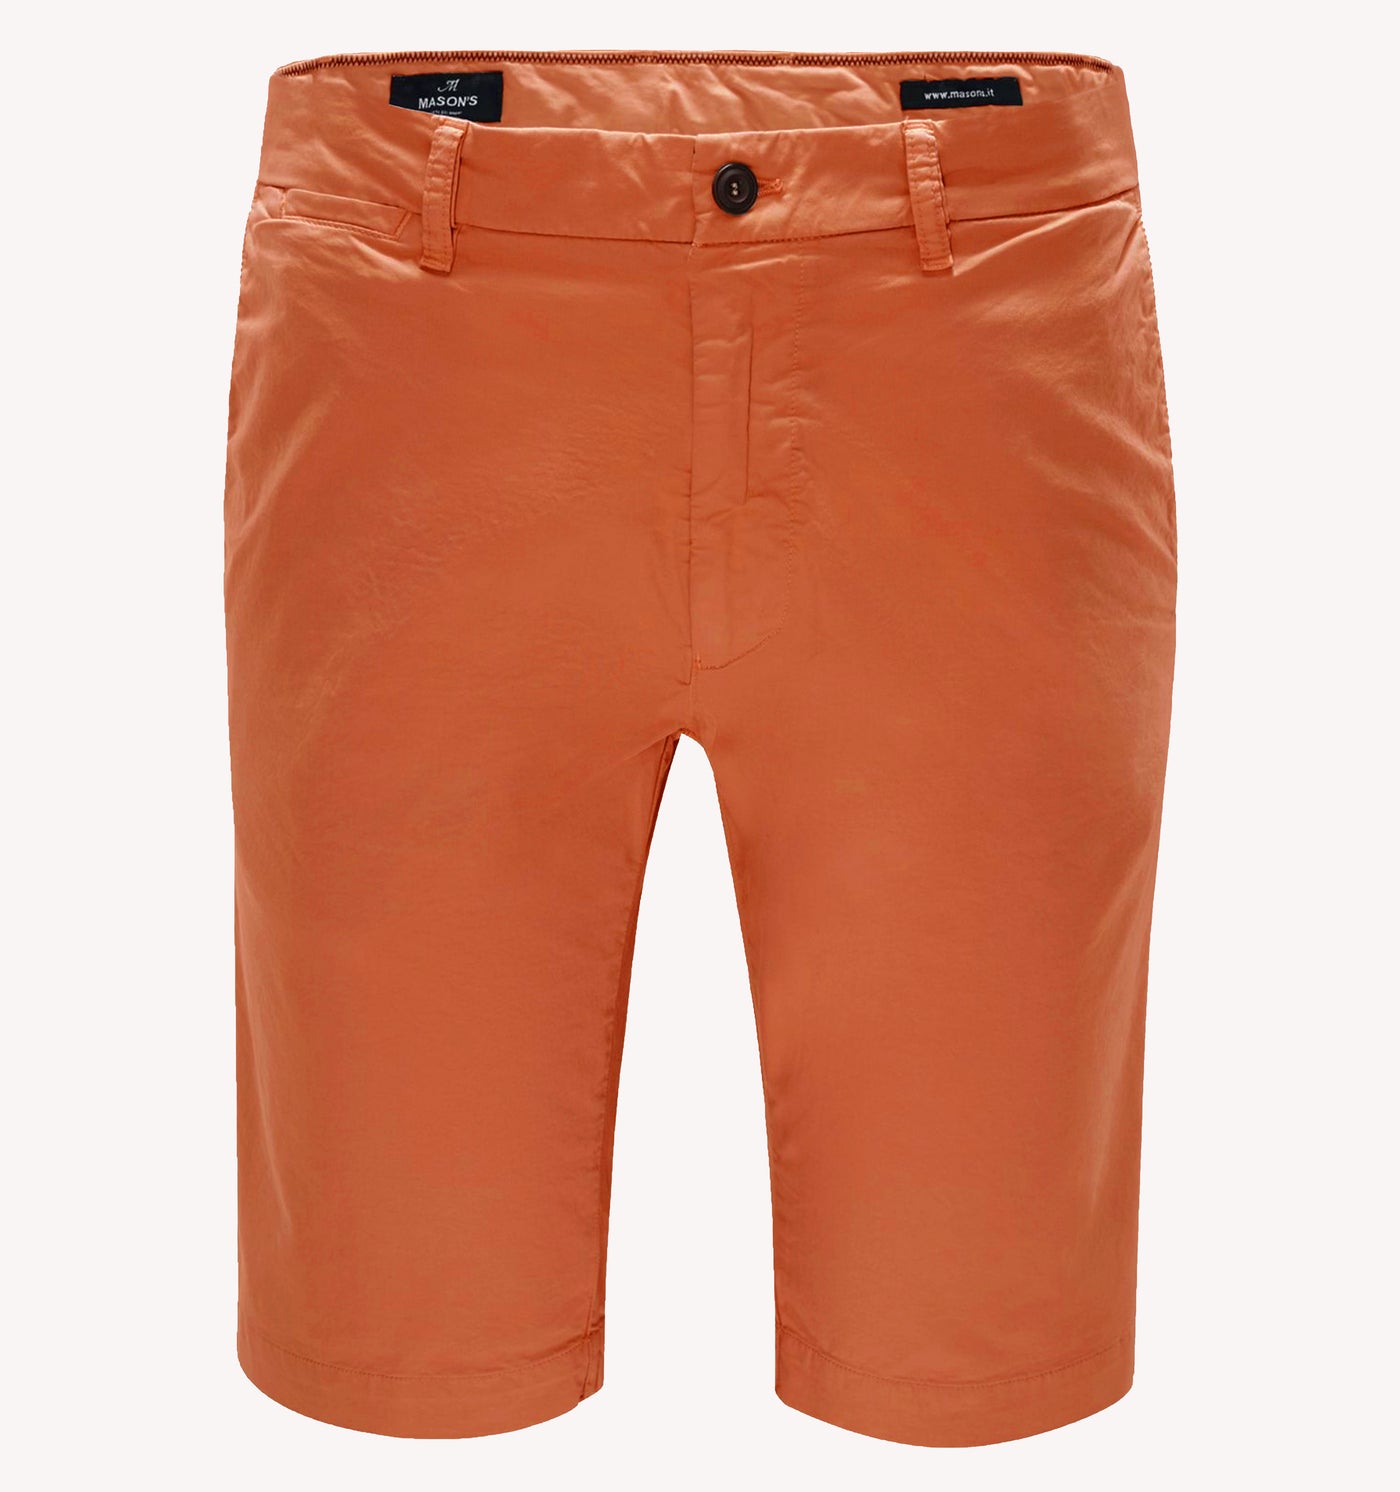 Mason's London Chino Bermuda Shorts in Orange